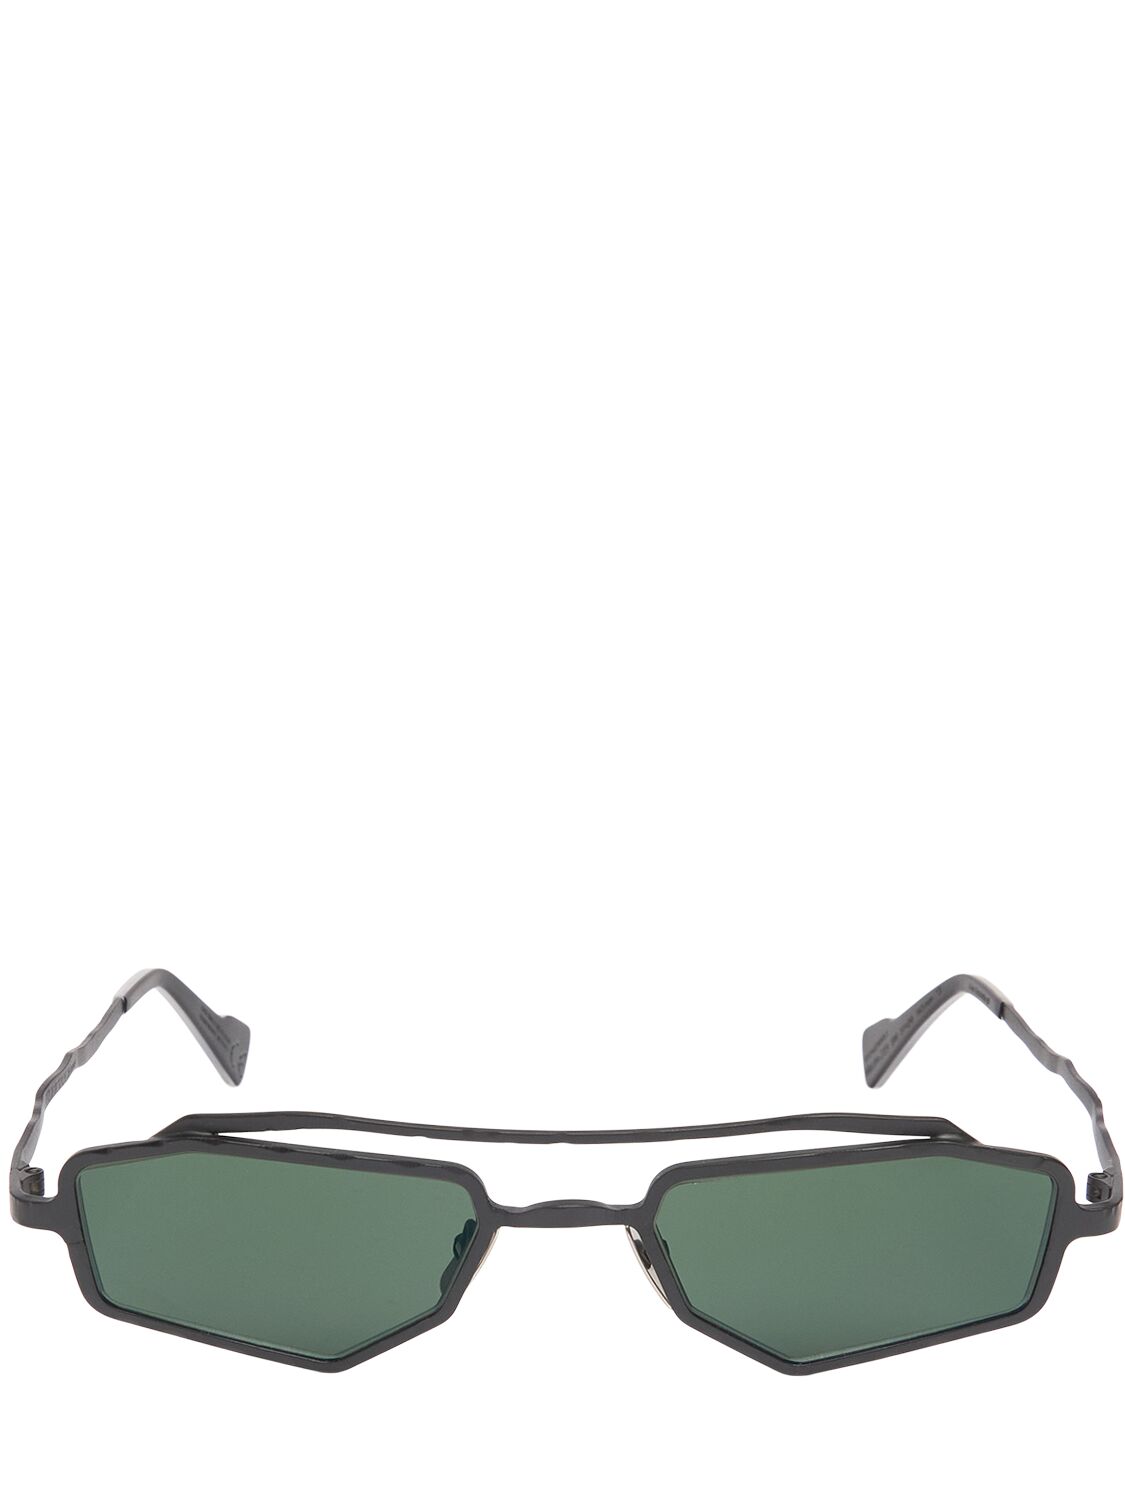 Z23 Squared Metal Sunglasses